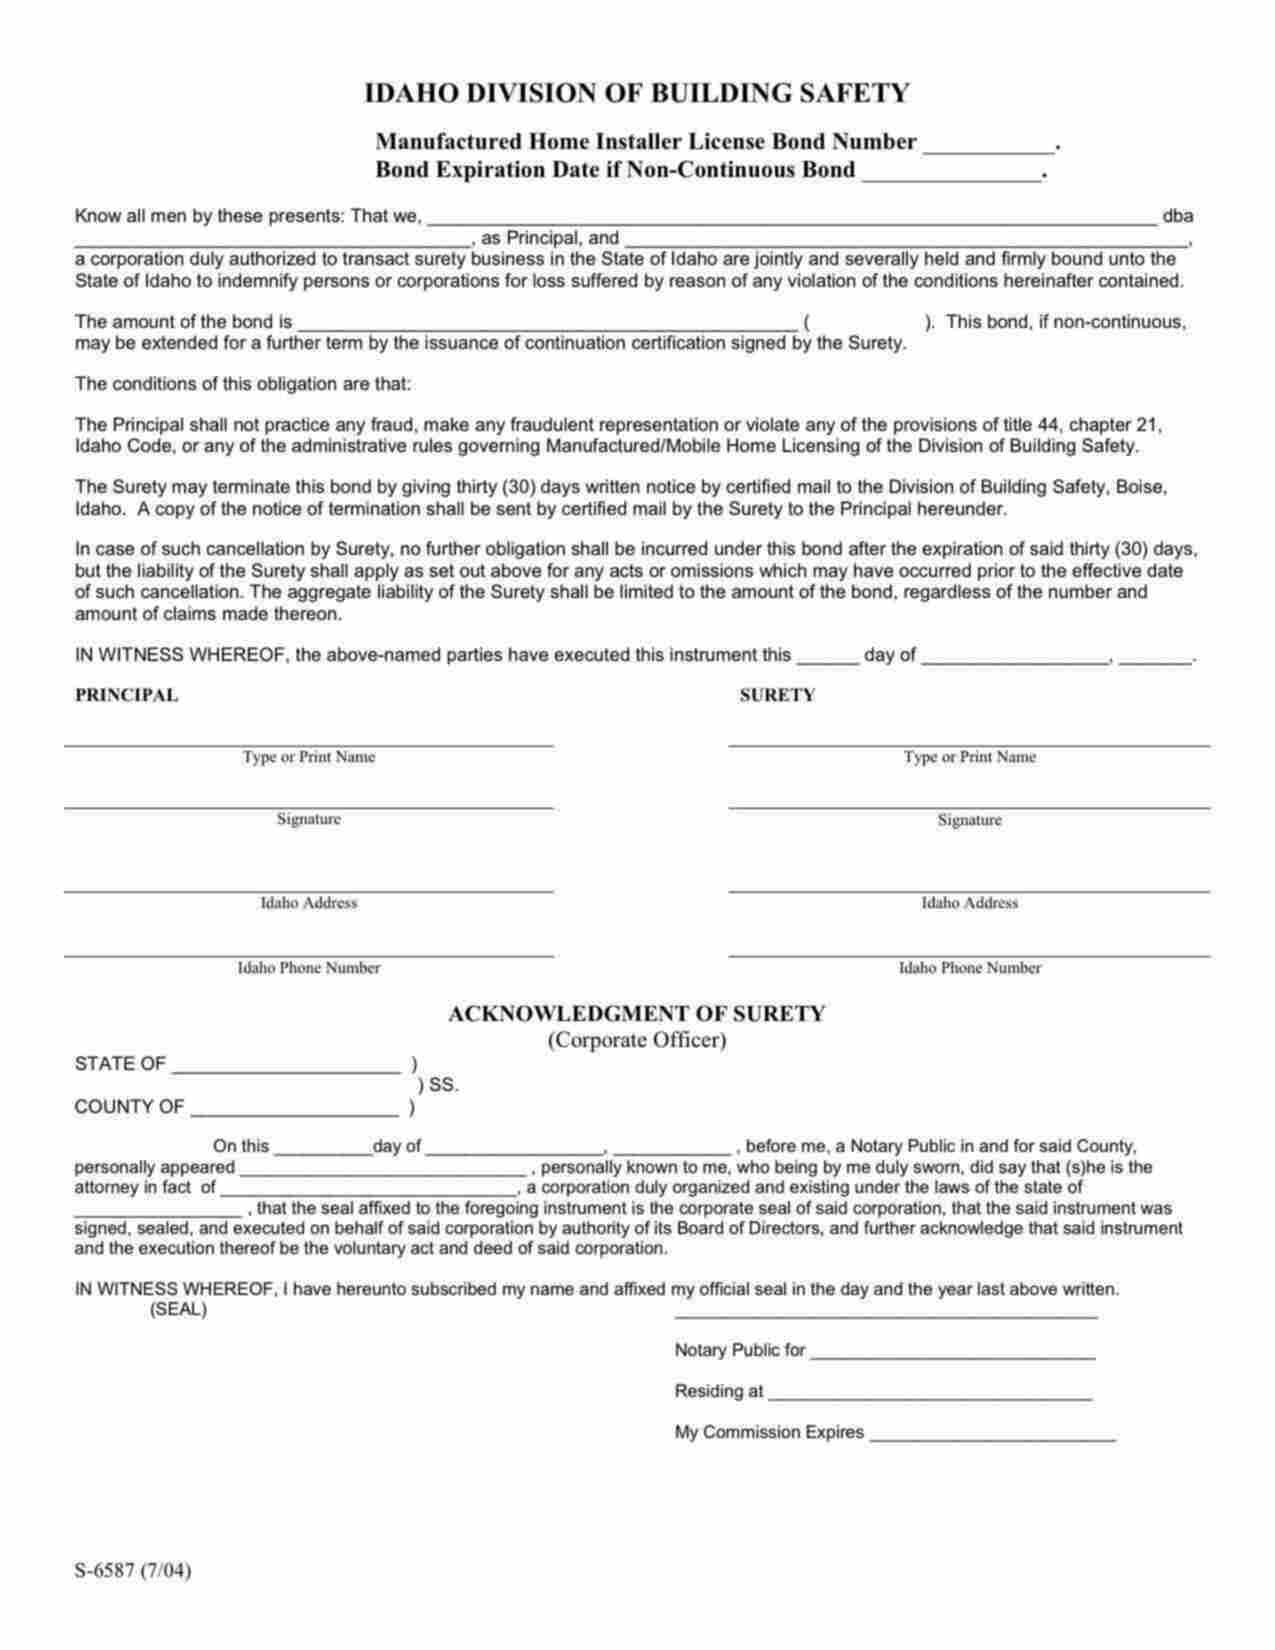 Idaho Manufactured Home Installer License Bond Form